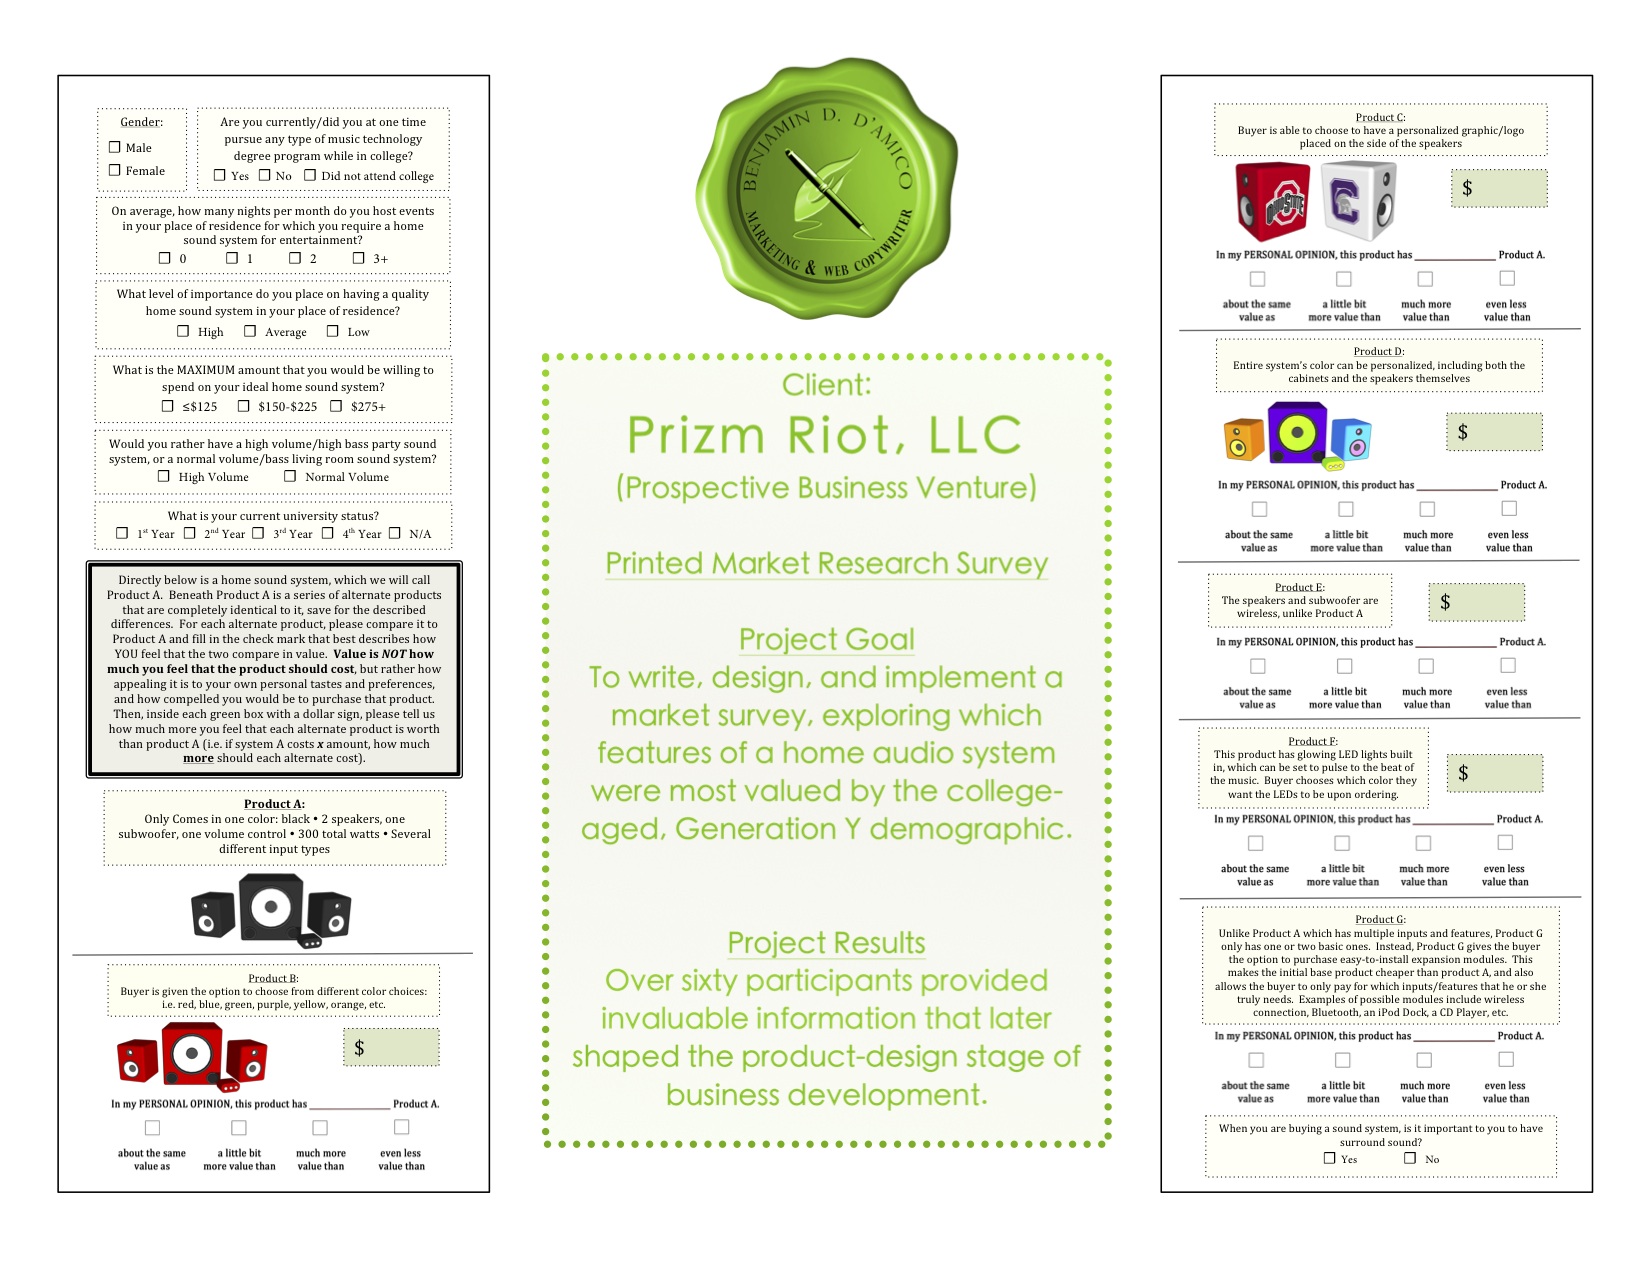 Prizm Riot Marketing Research | Survey Writing, Design & Implementation